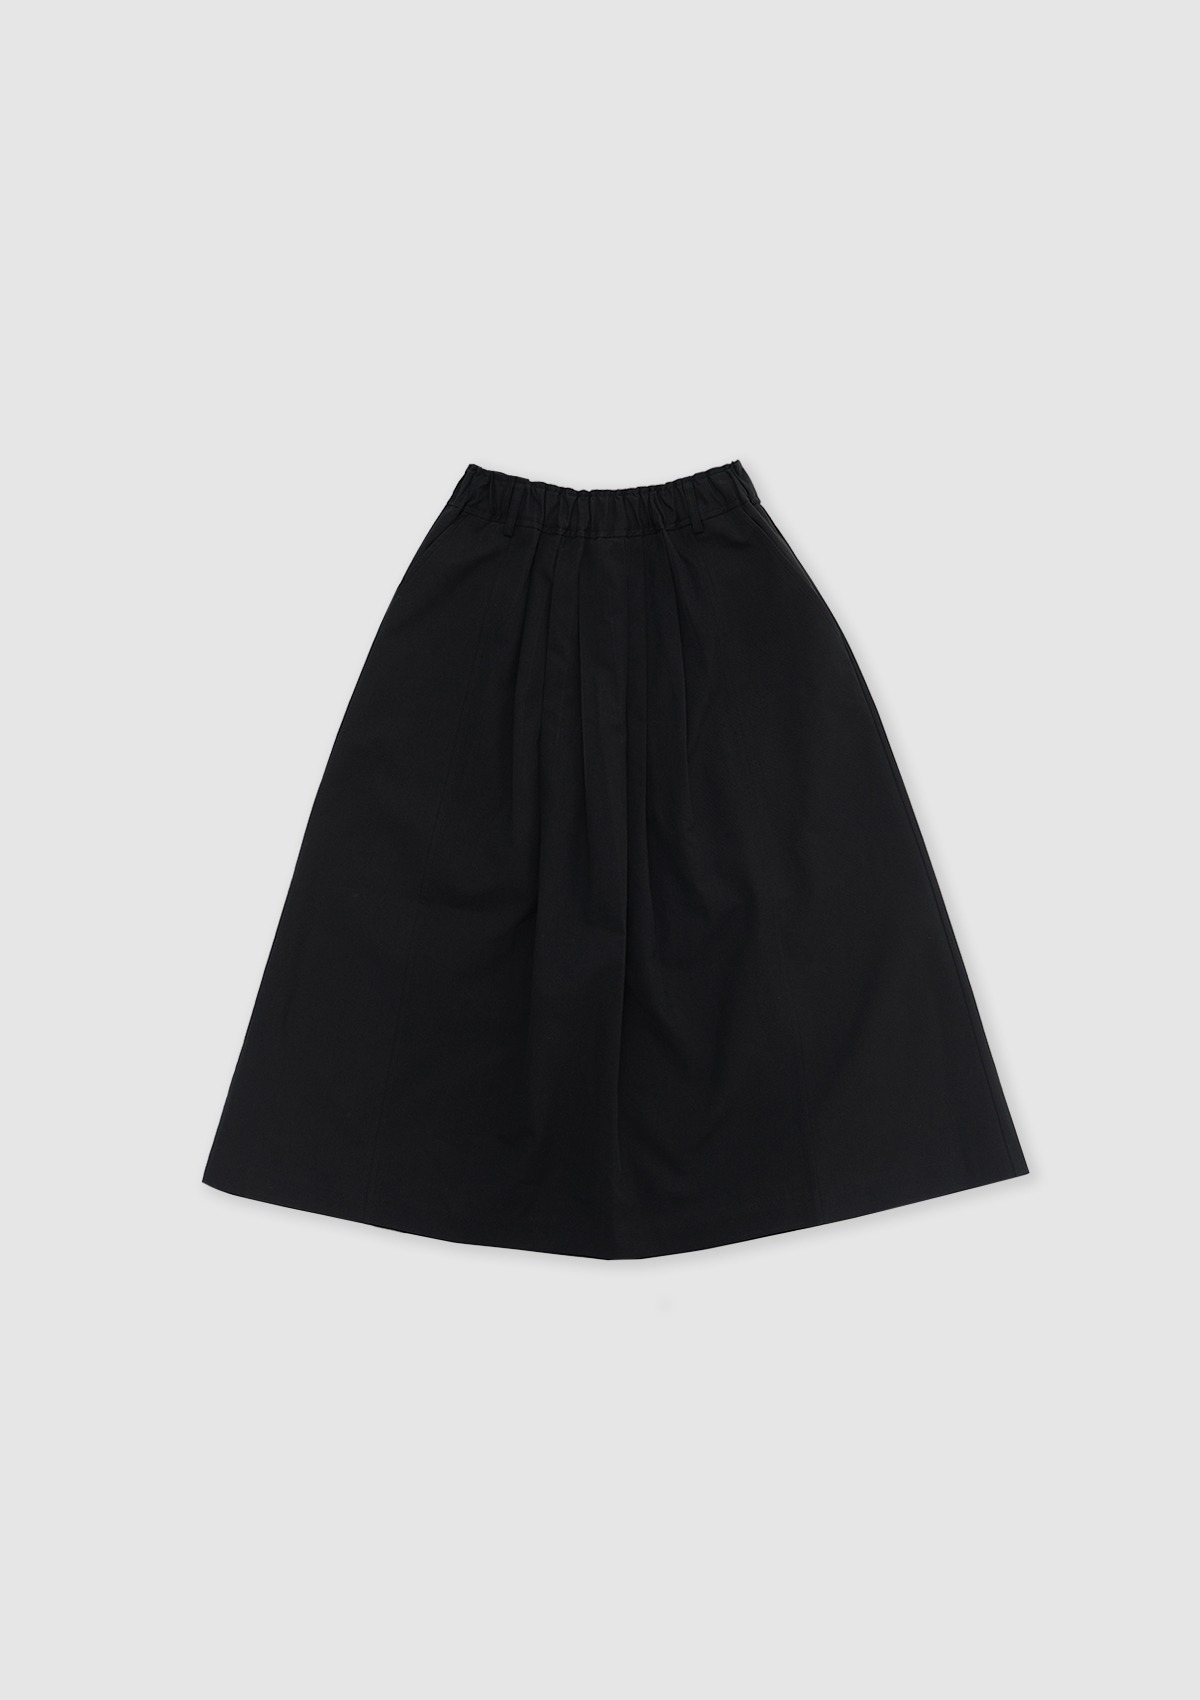 Hidy Skirt (Black)